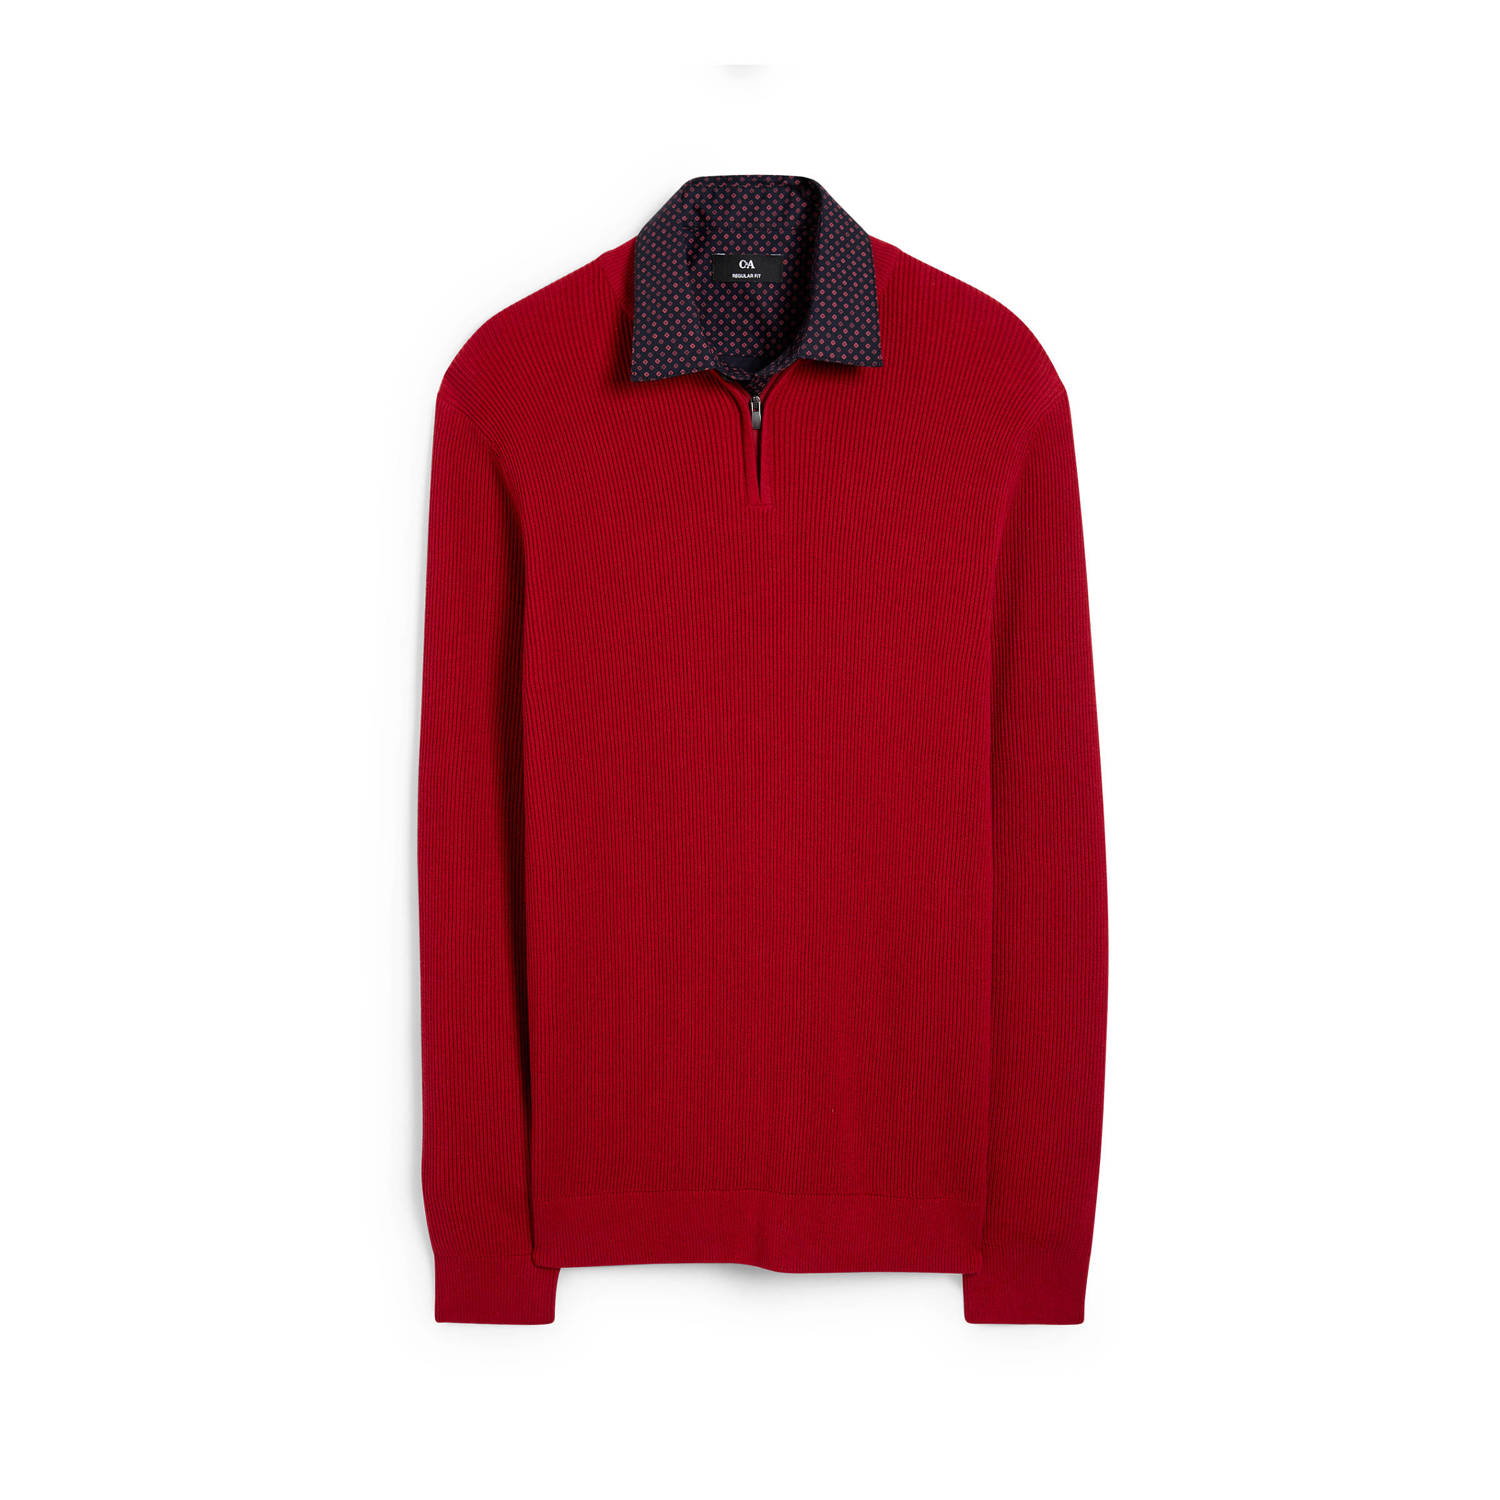 C&A ribgebreide trui en overhemd rood donkerblauw